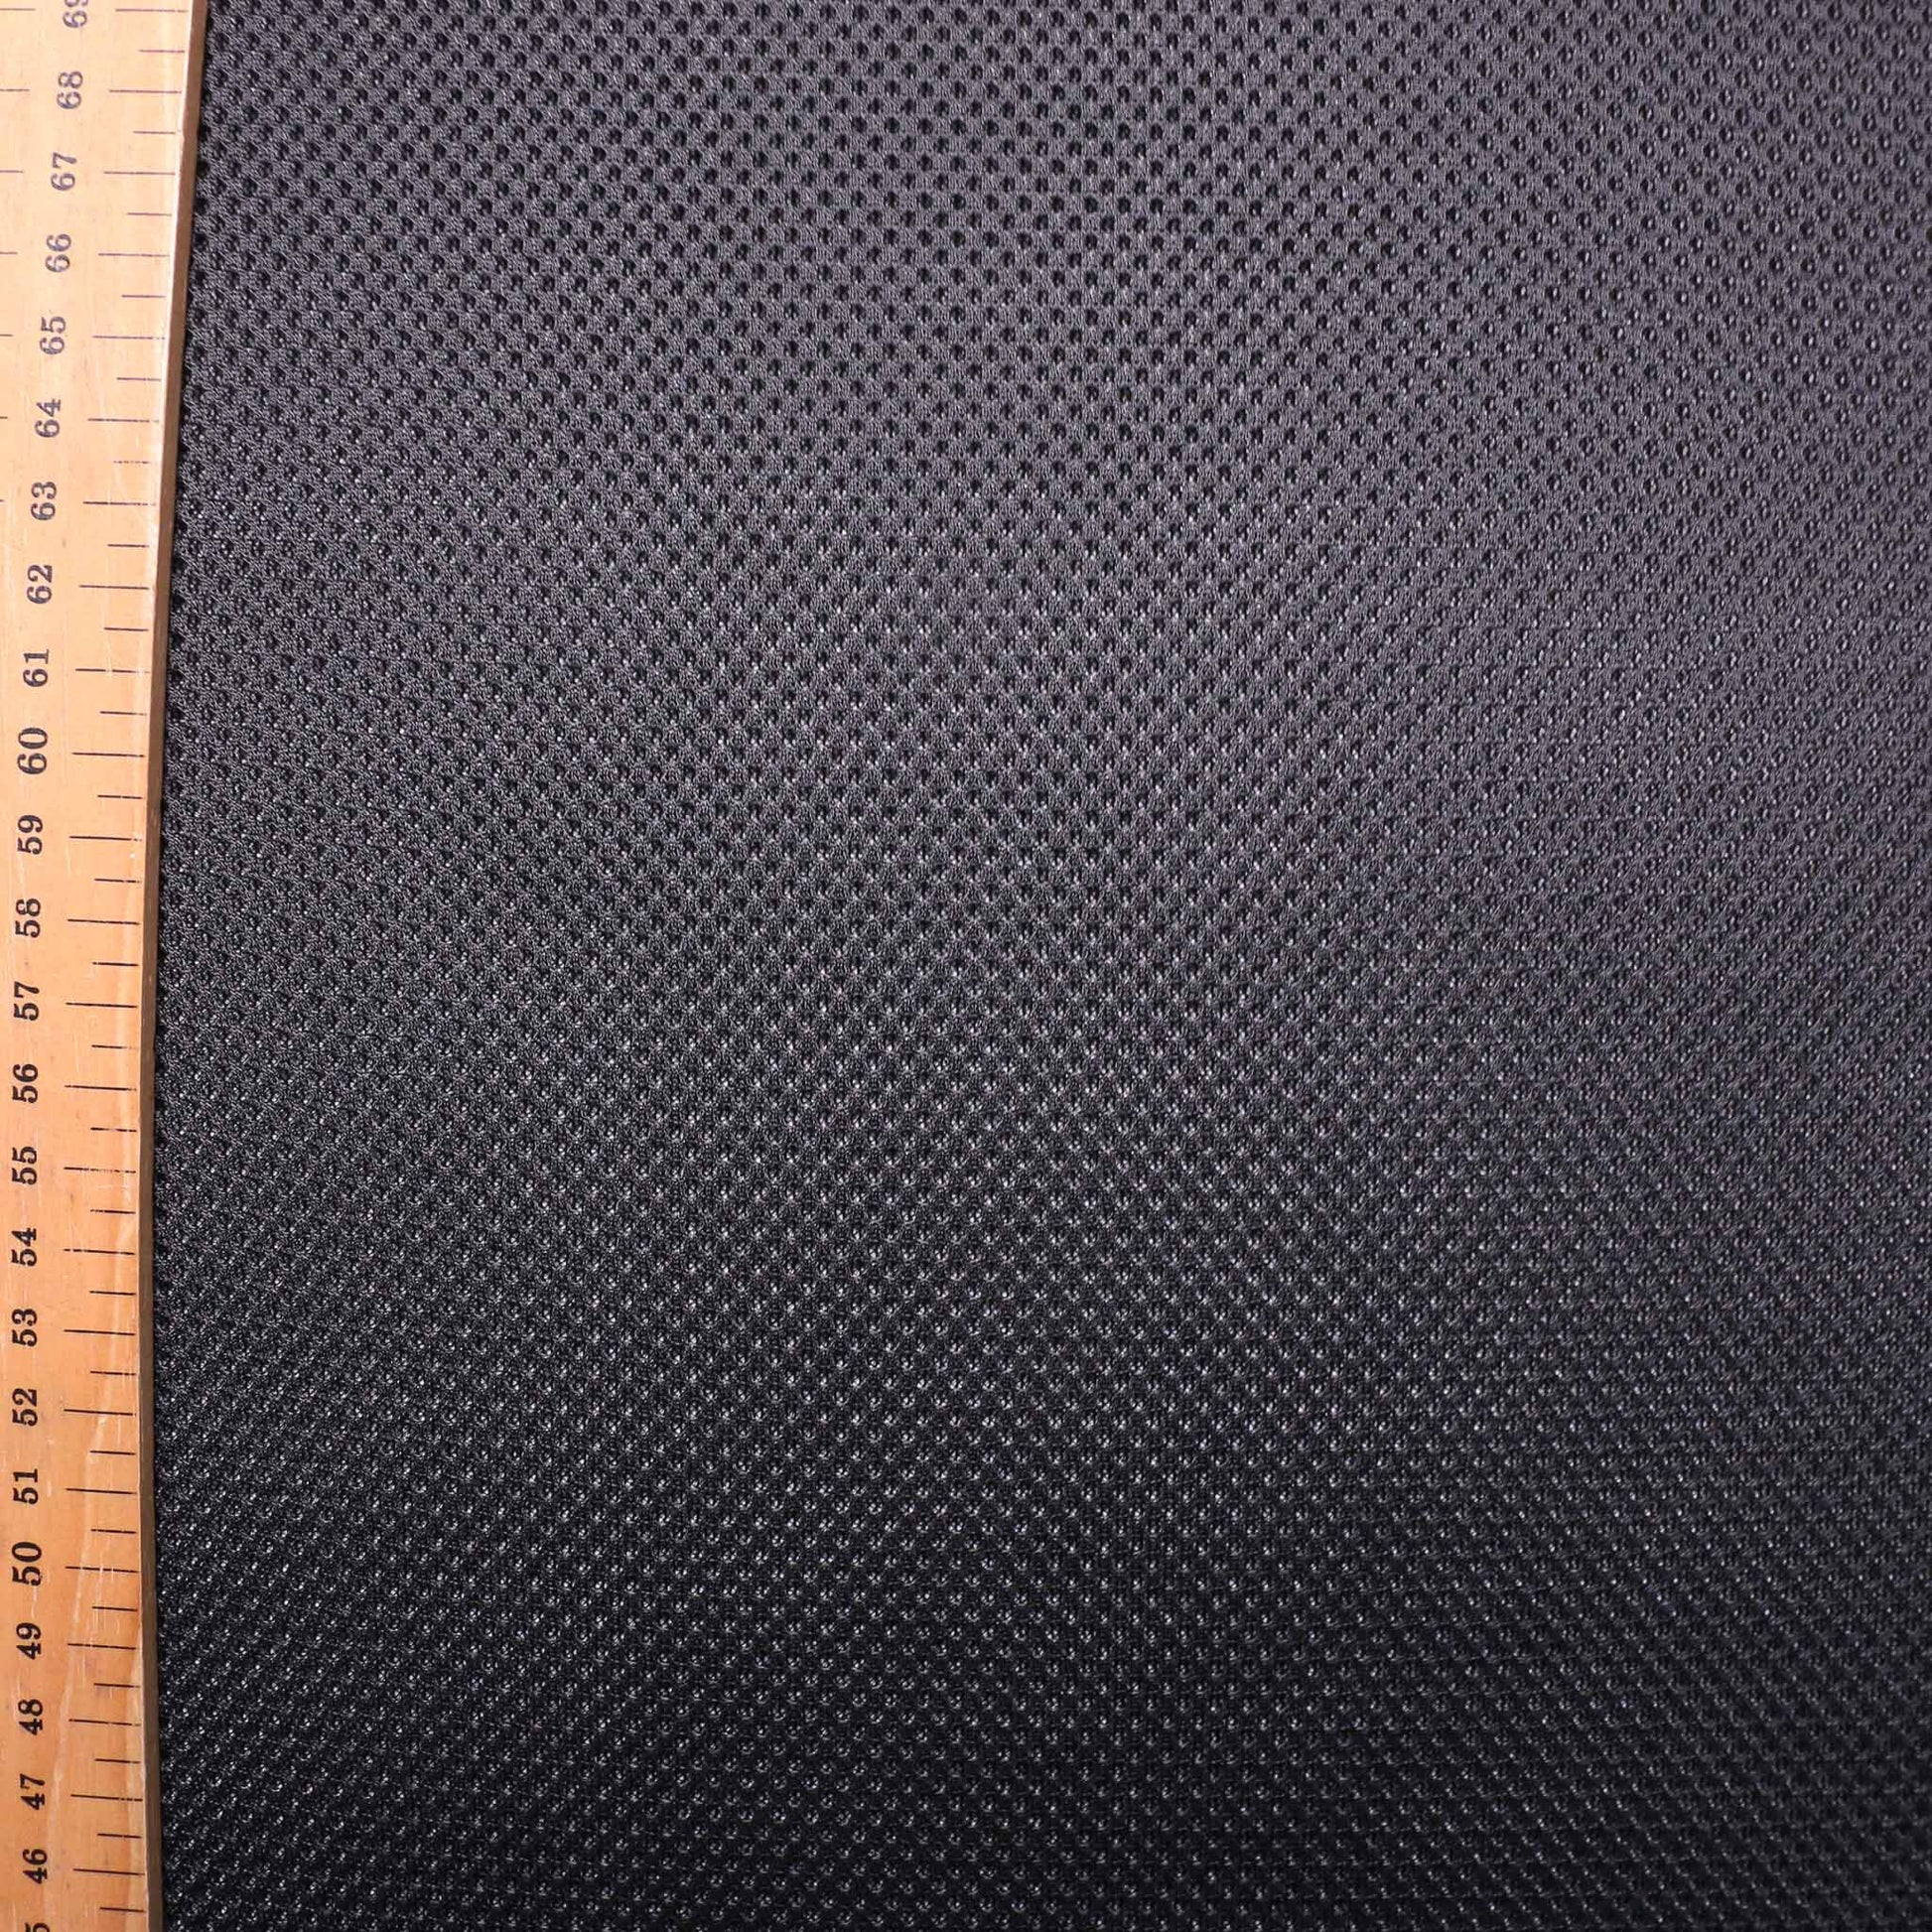 metre sports fabric in black airtex mesh spacer fabric